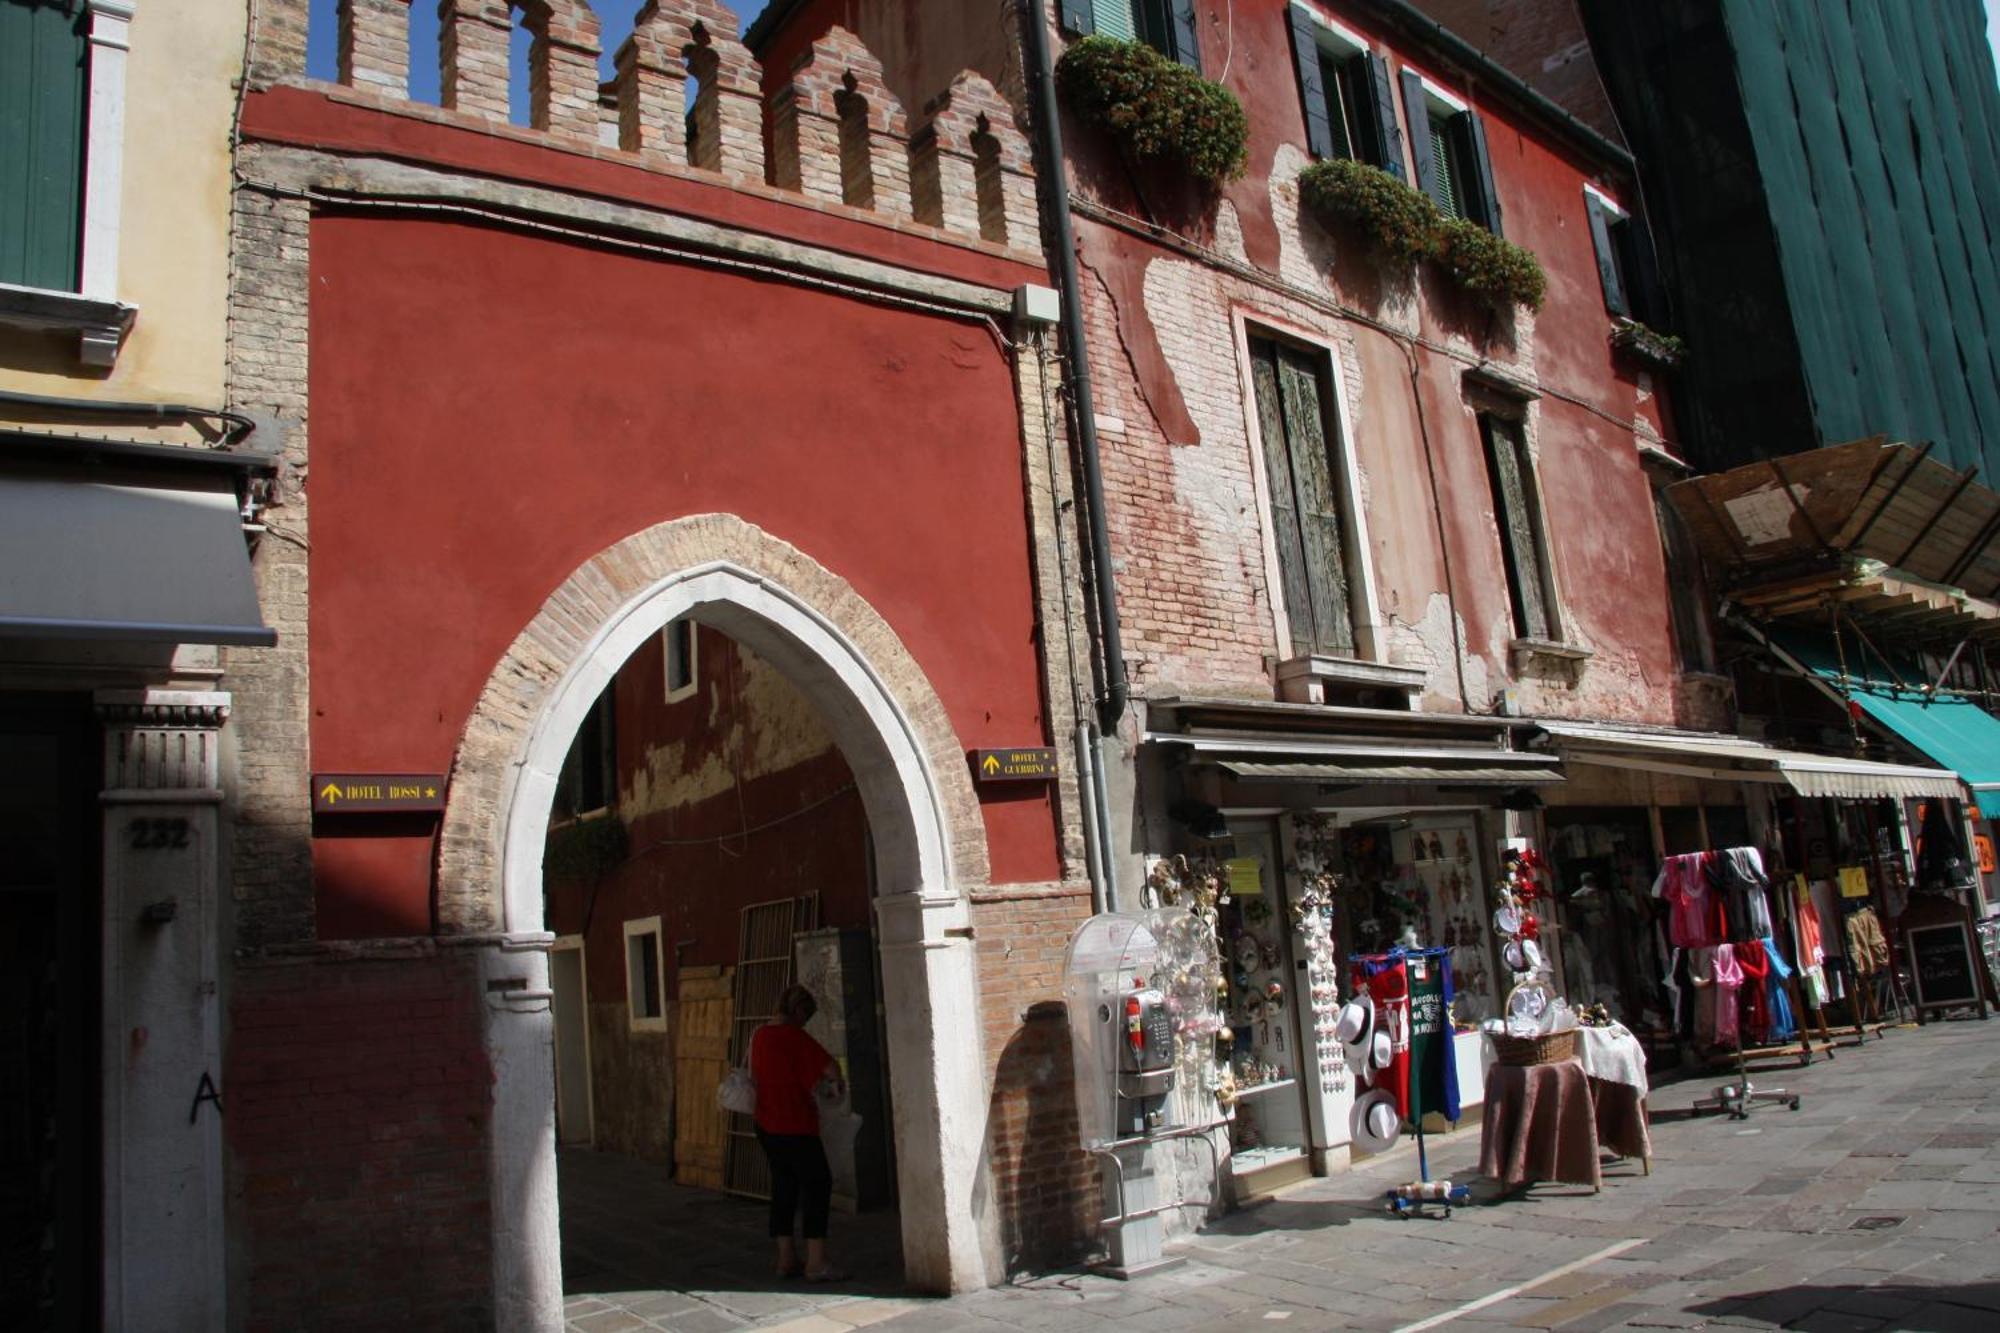 Hotel Guerrini Venedig Exterior foto